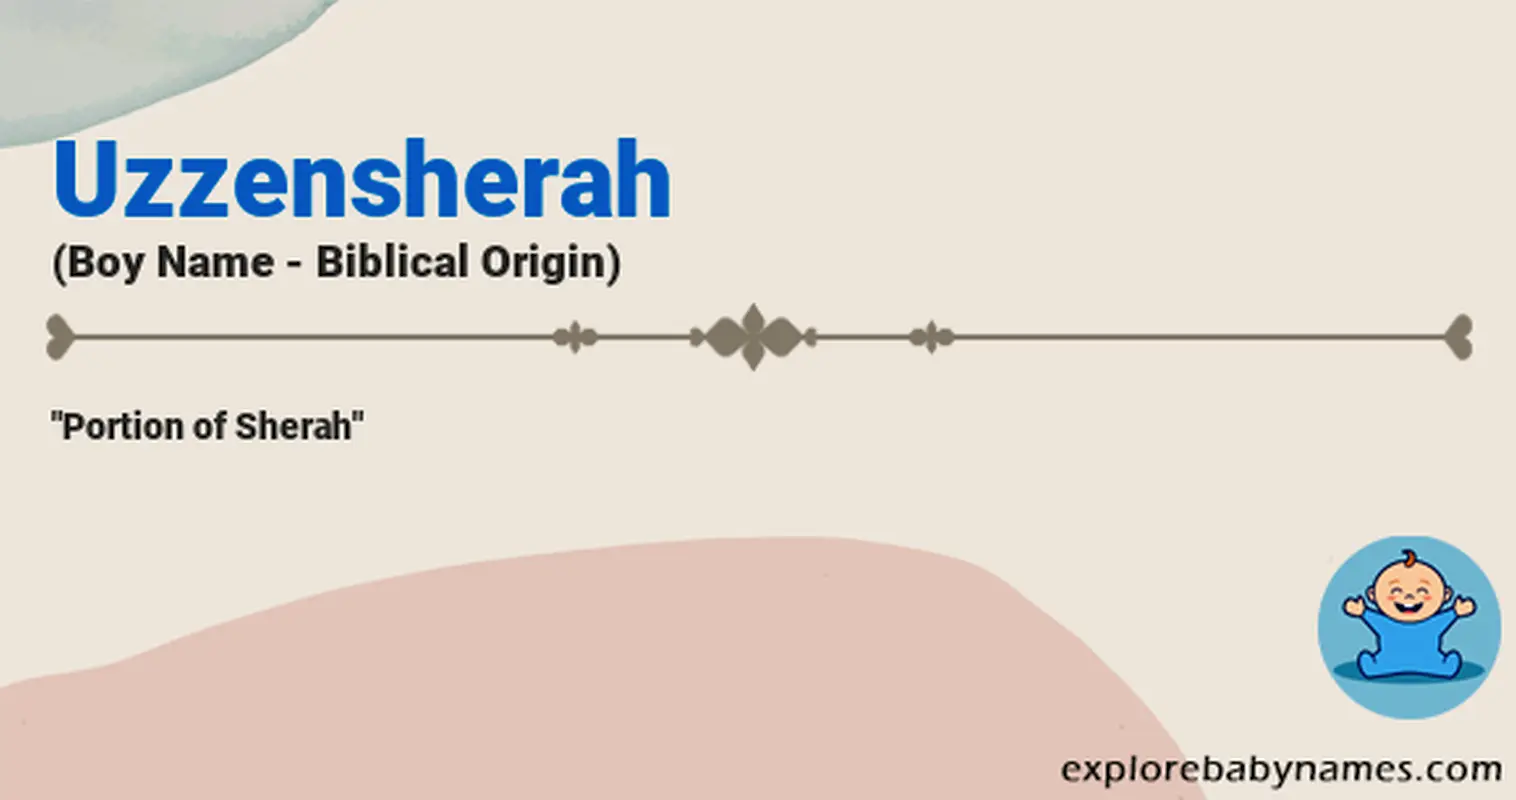 Meaning of Uzzensherah